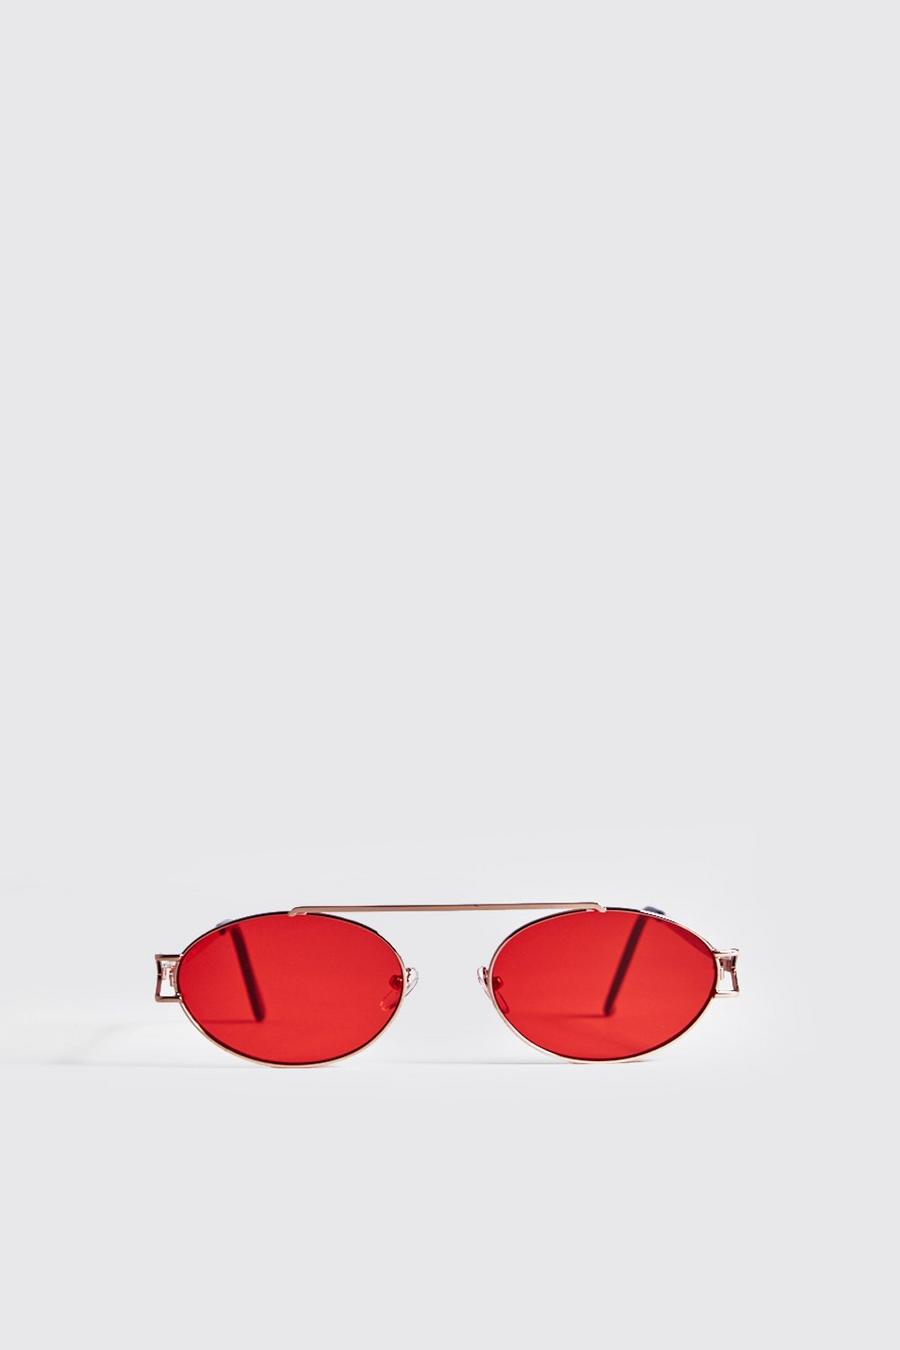 Gold metallic Red Lens Round Metal Frame Sunglasses